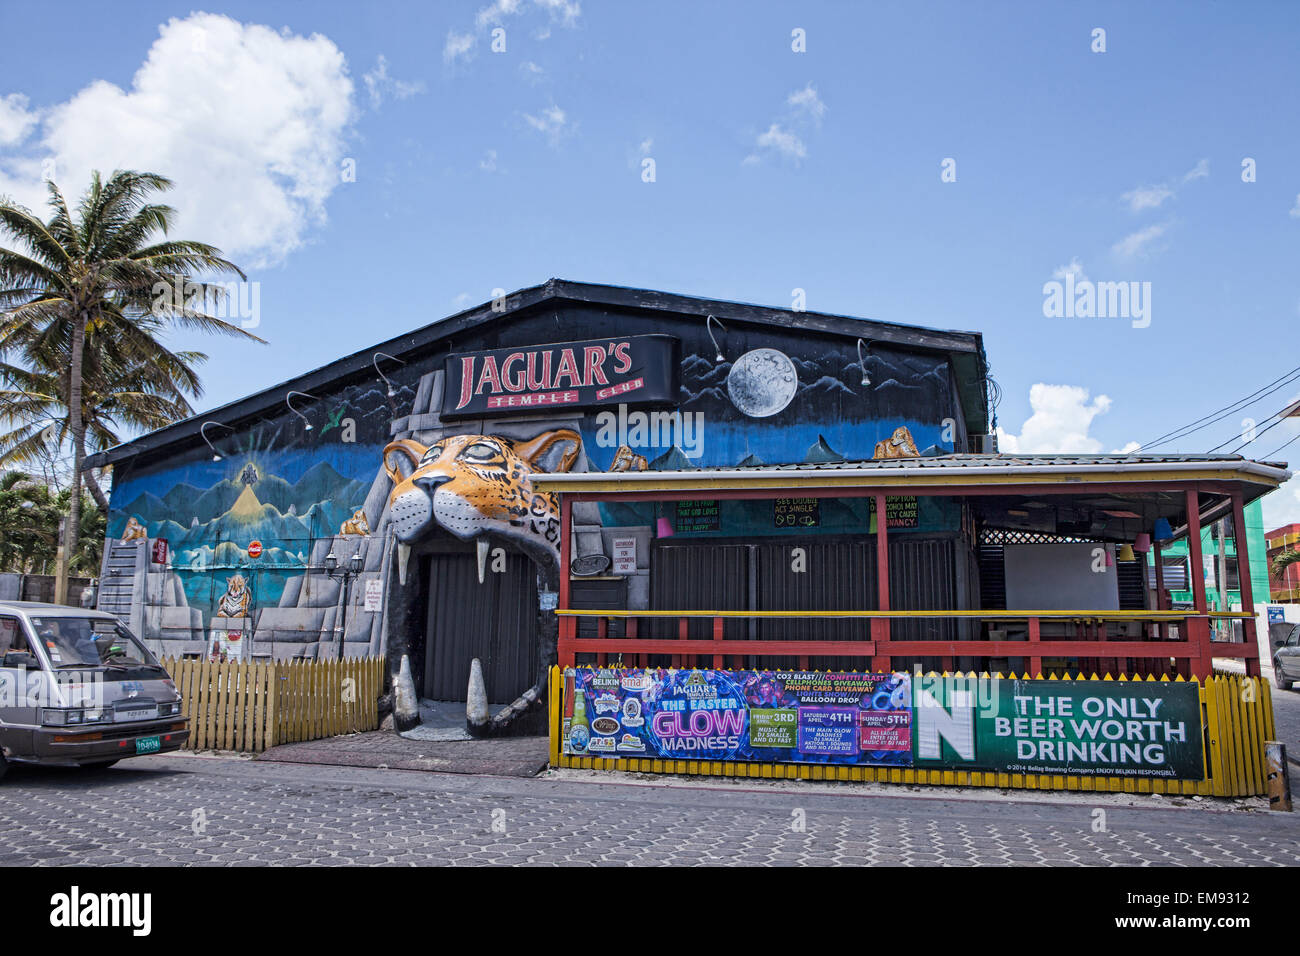 Jaguar's Temple Club in San Pedro, Ambergris Caye, Belize, South America. Stock Photo